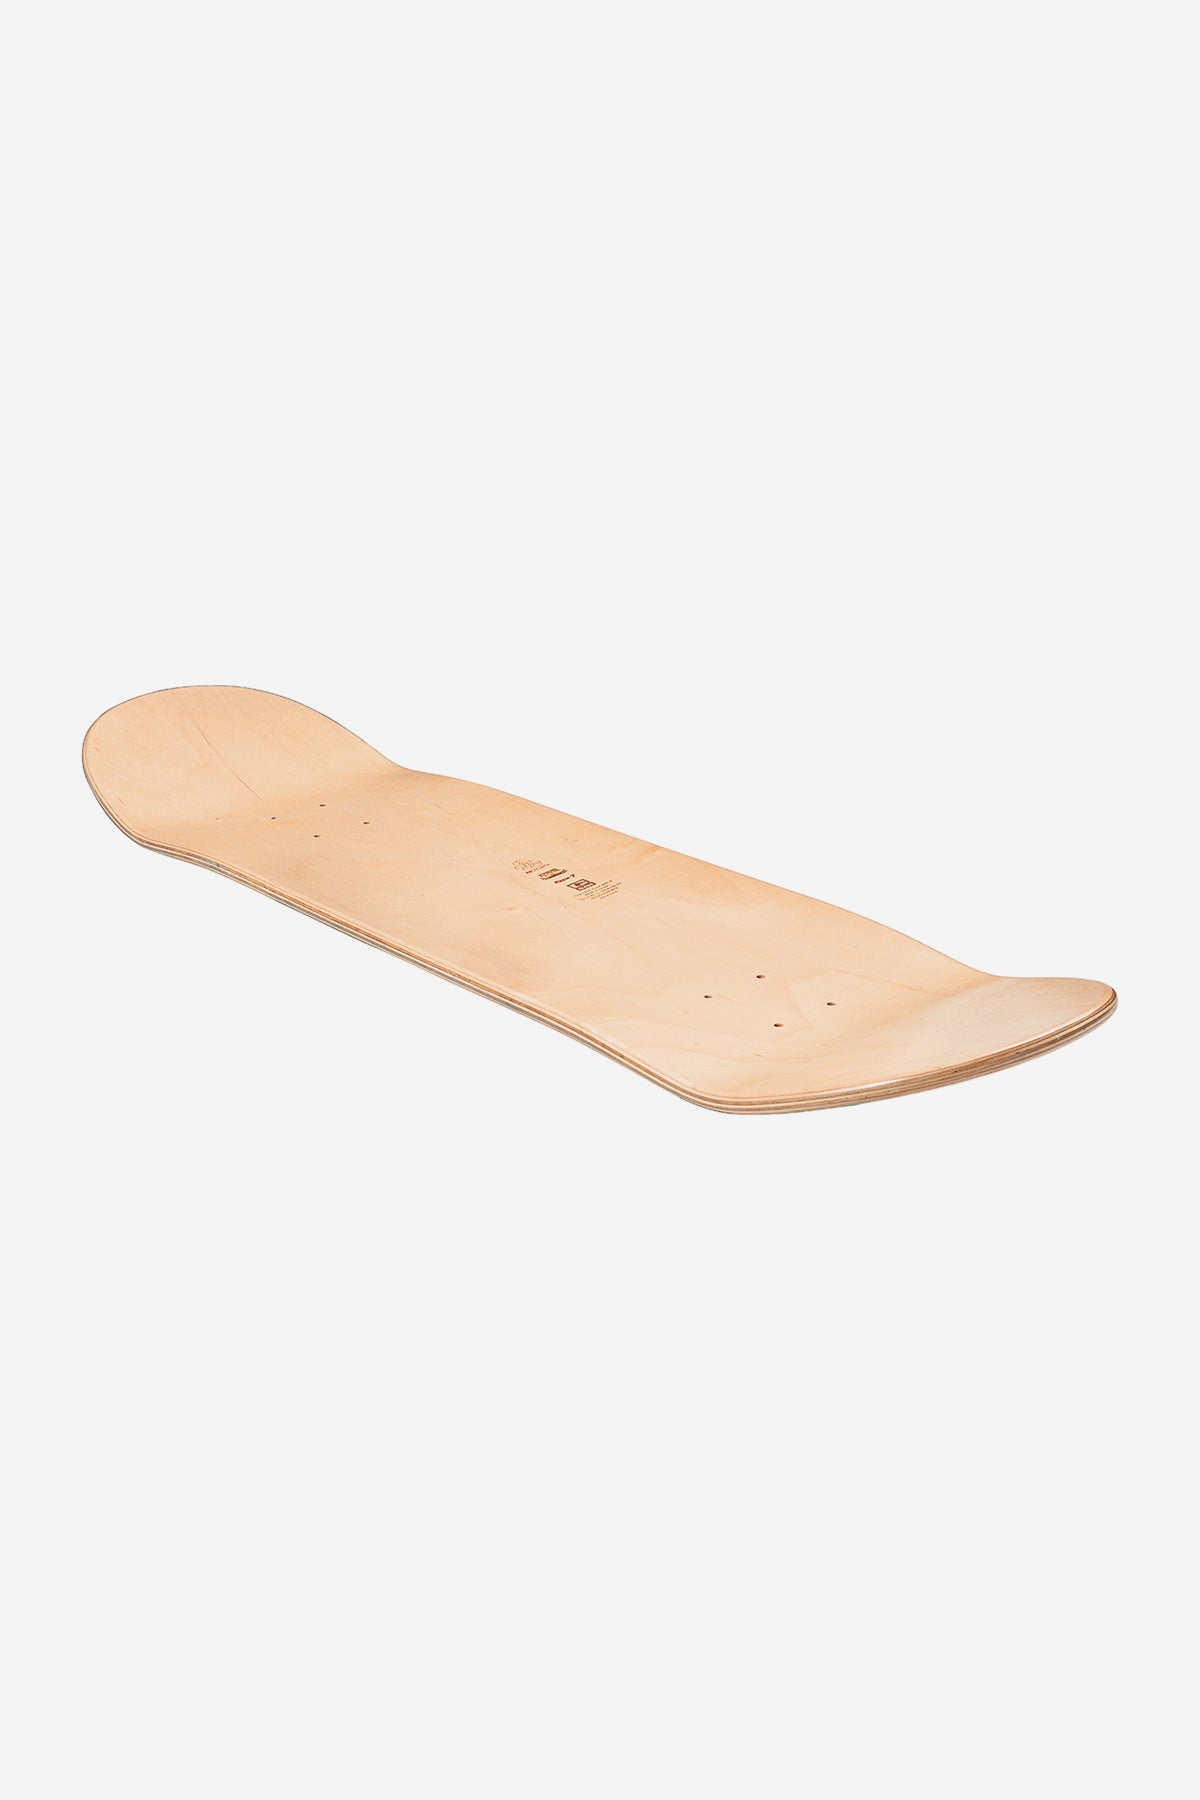 Globe - Goodstock - Clay - Skate de 8,5 polegadas Deck